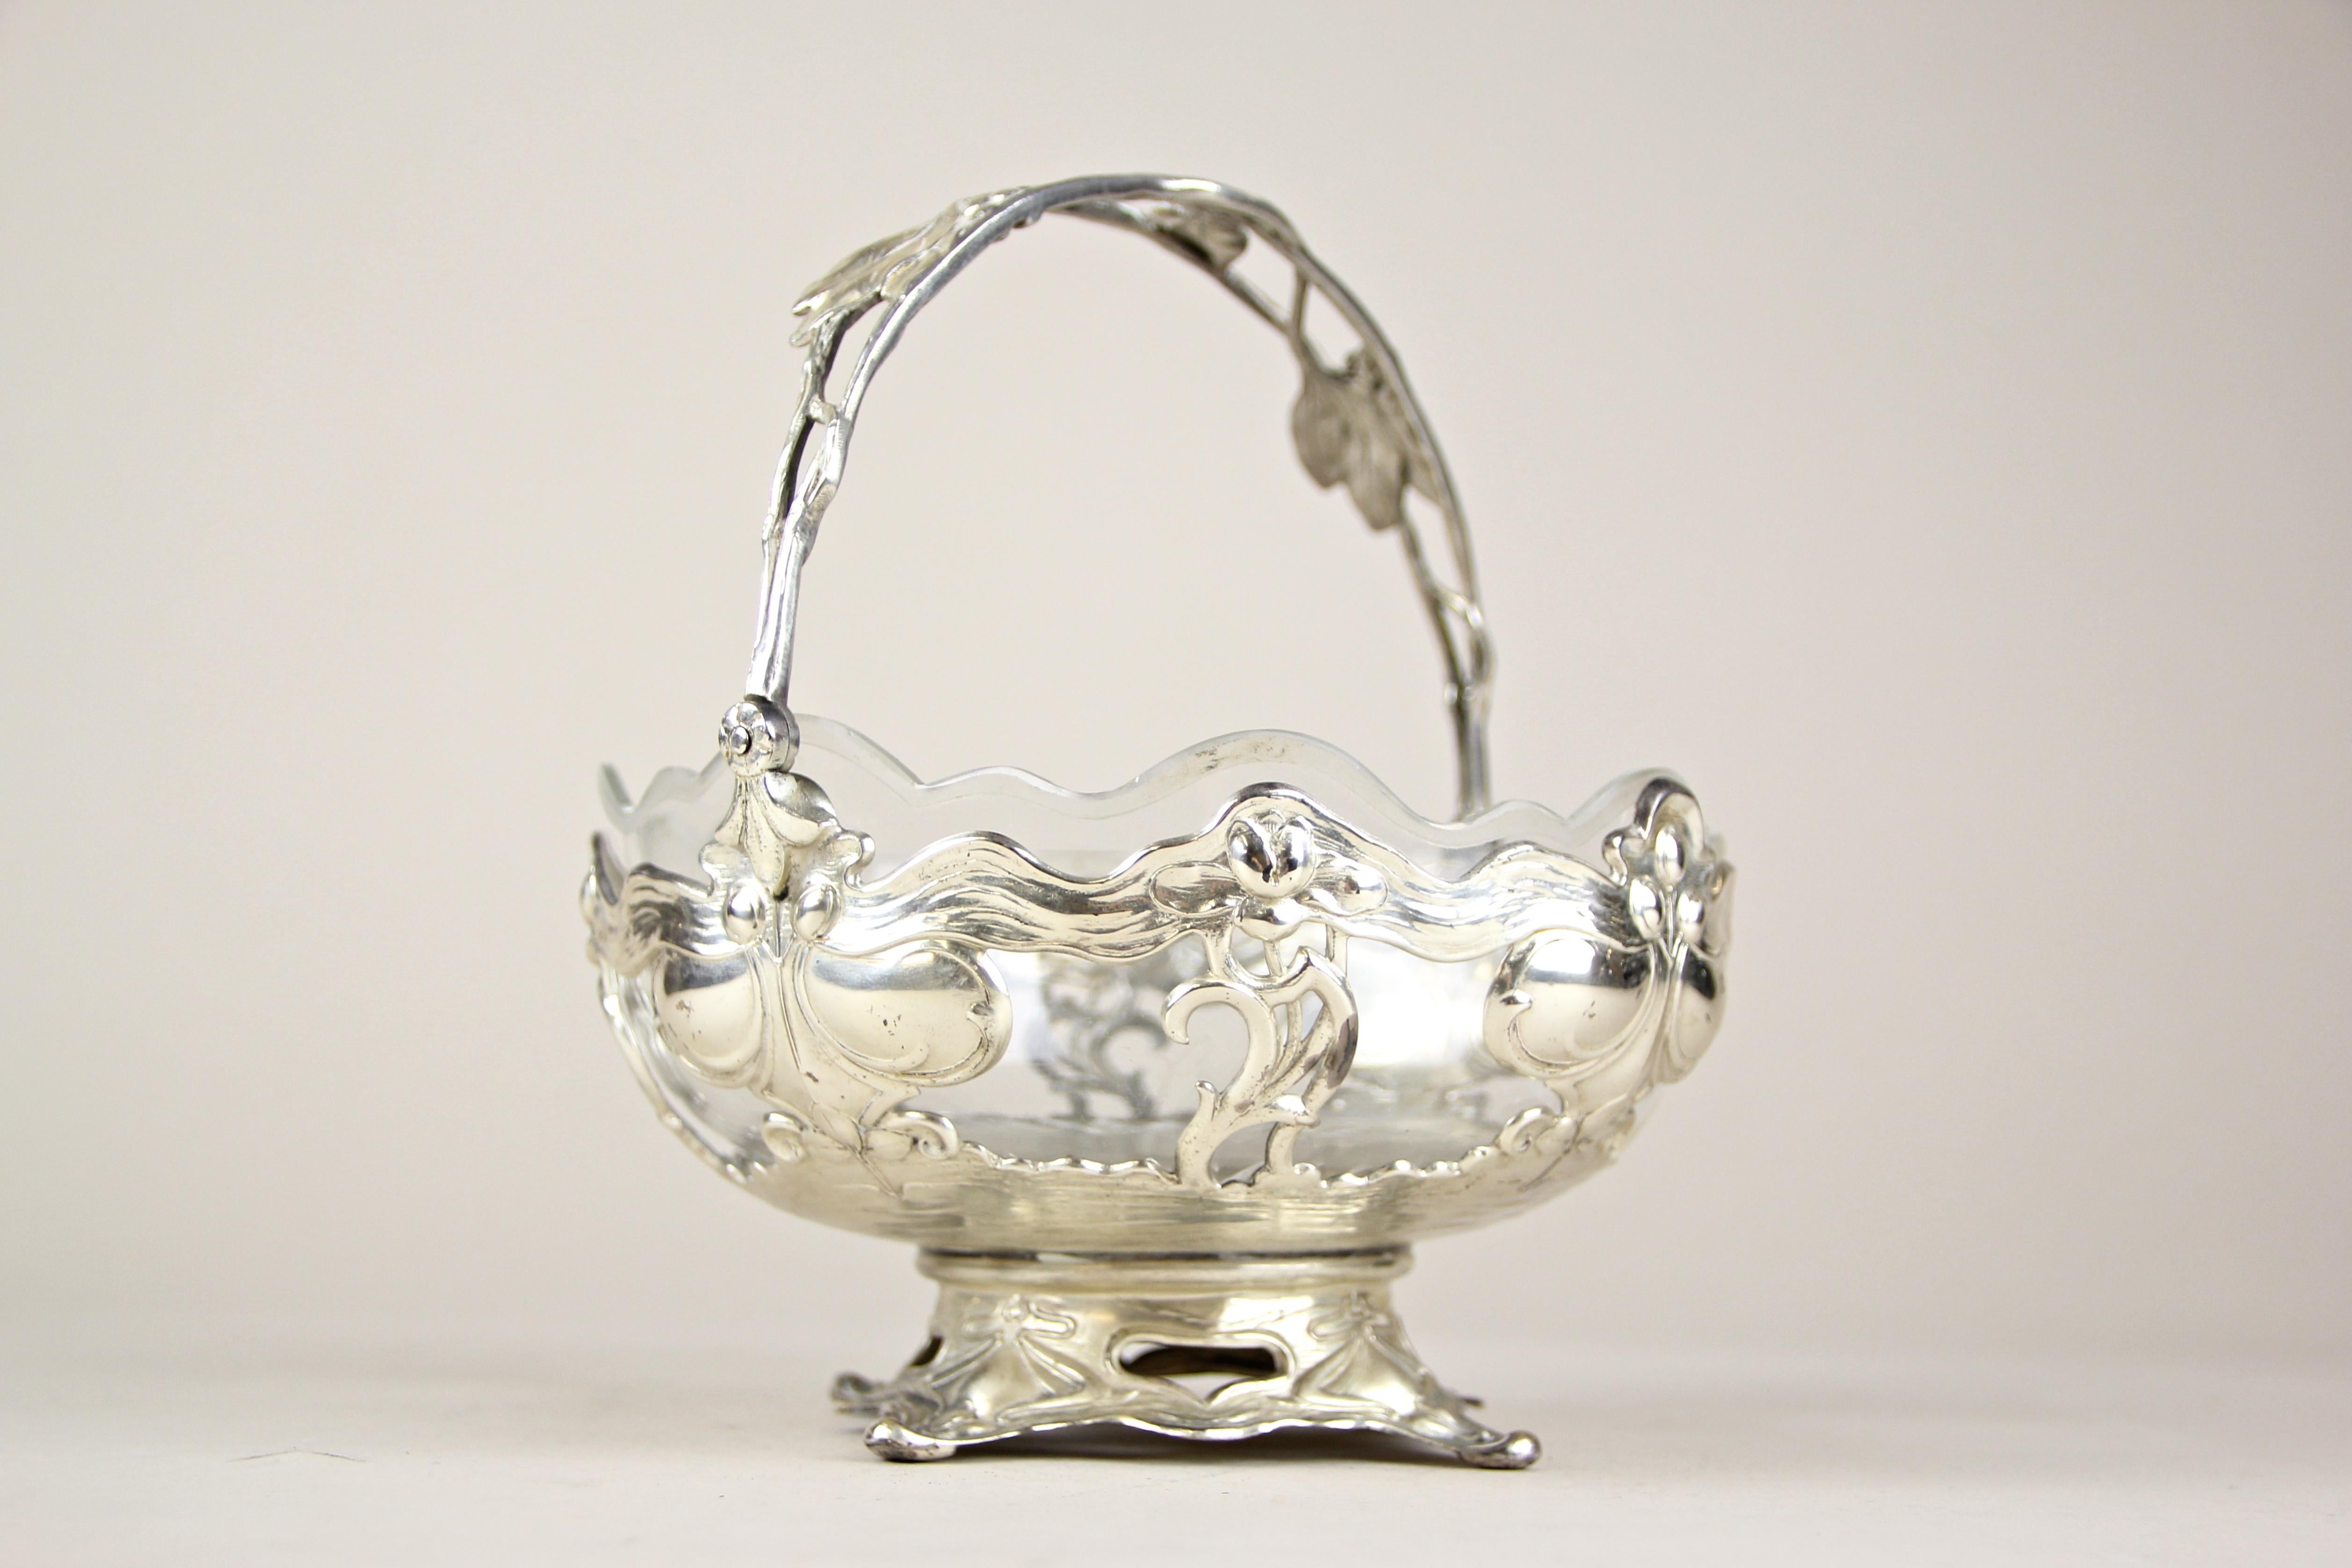 Britannia Standard Silver Silvered Centerpiece with Cut Glass Bowl by A. Köhler & Cie WMF, Vienna